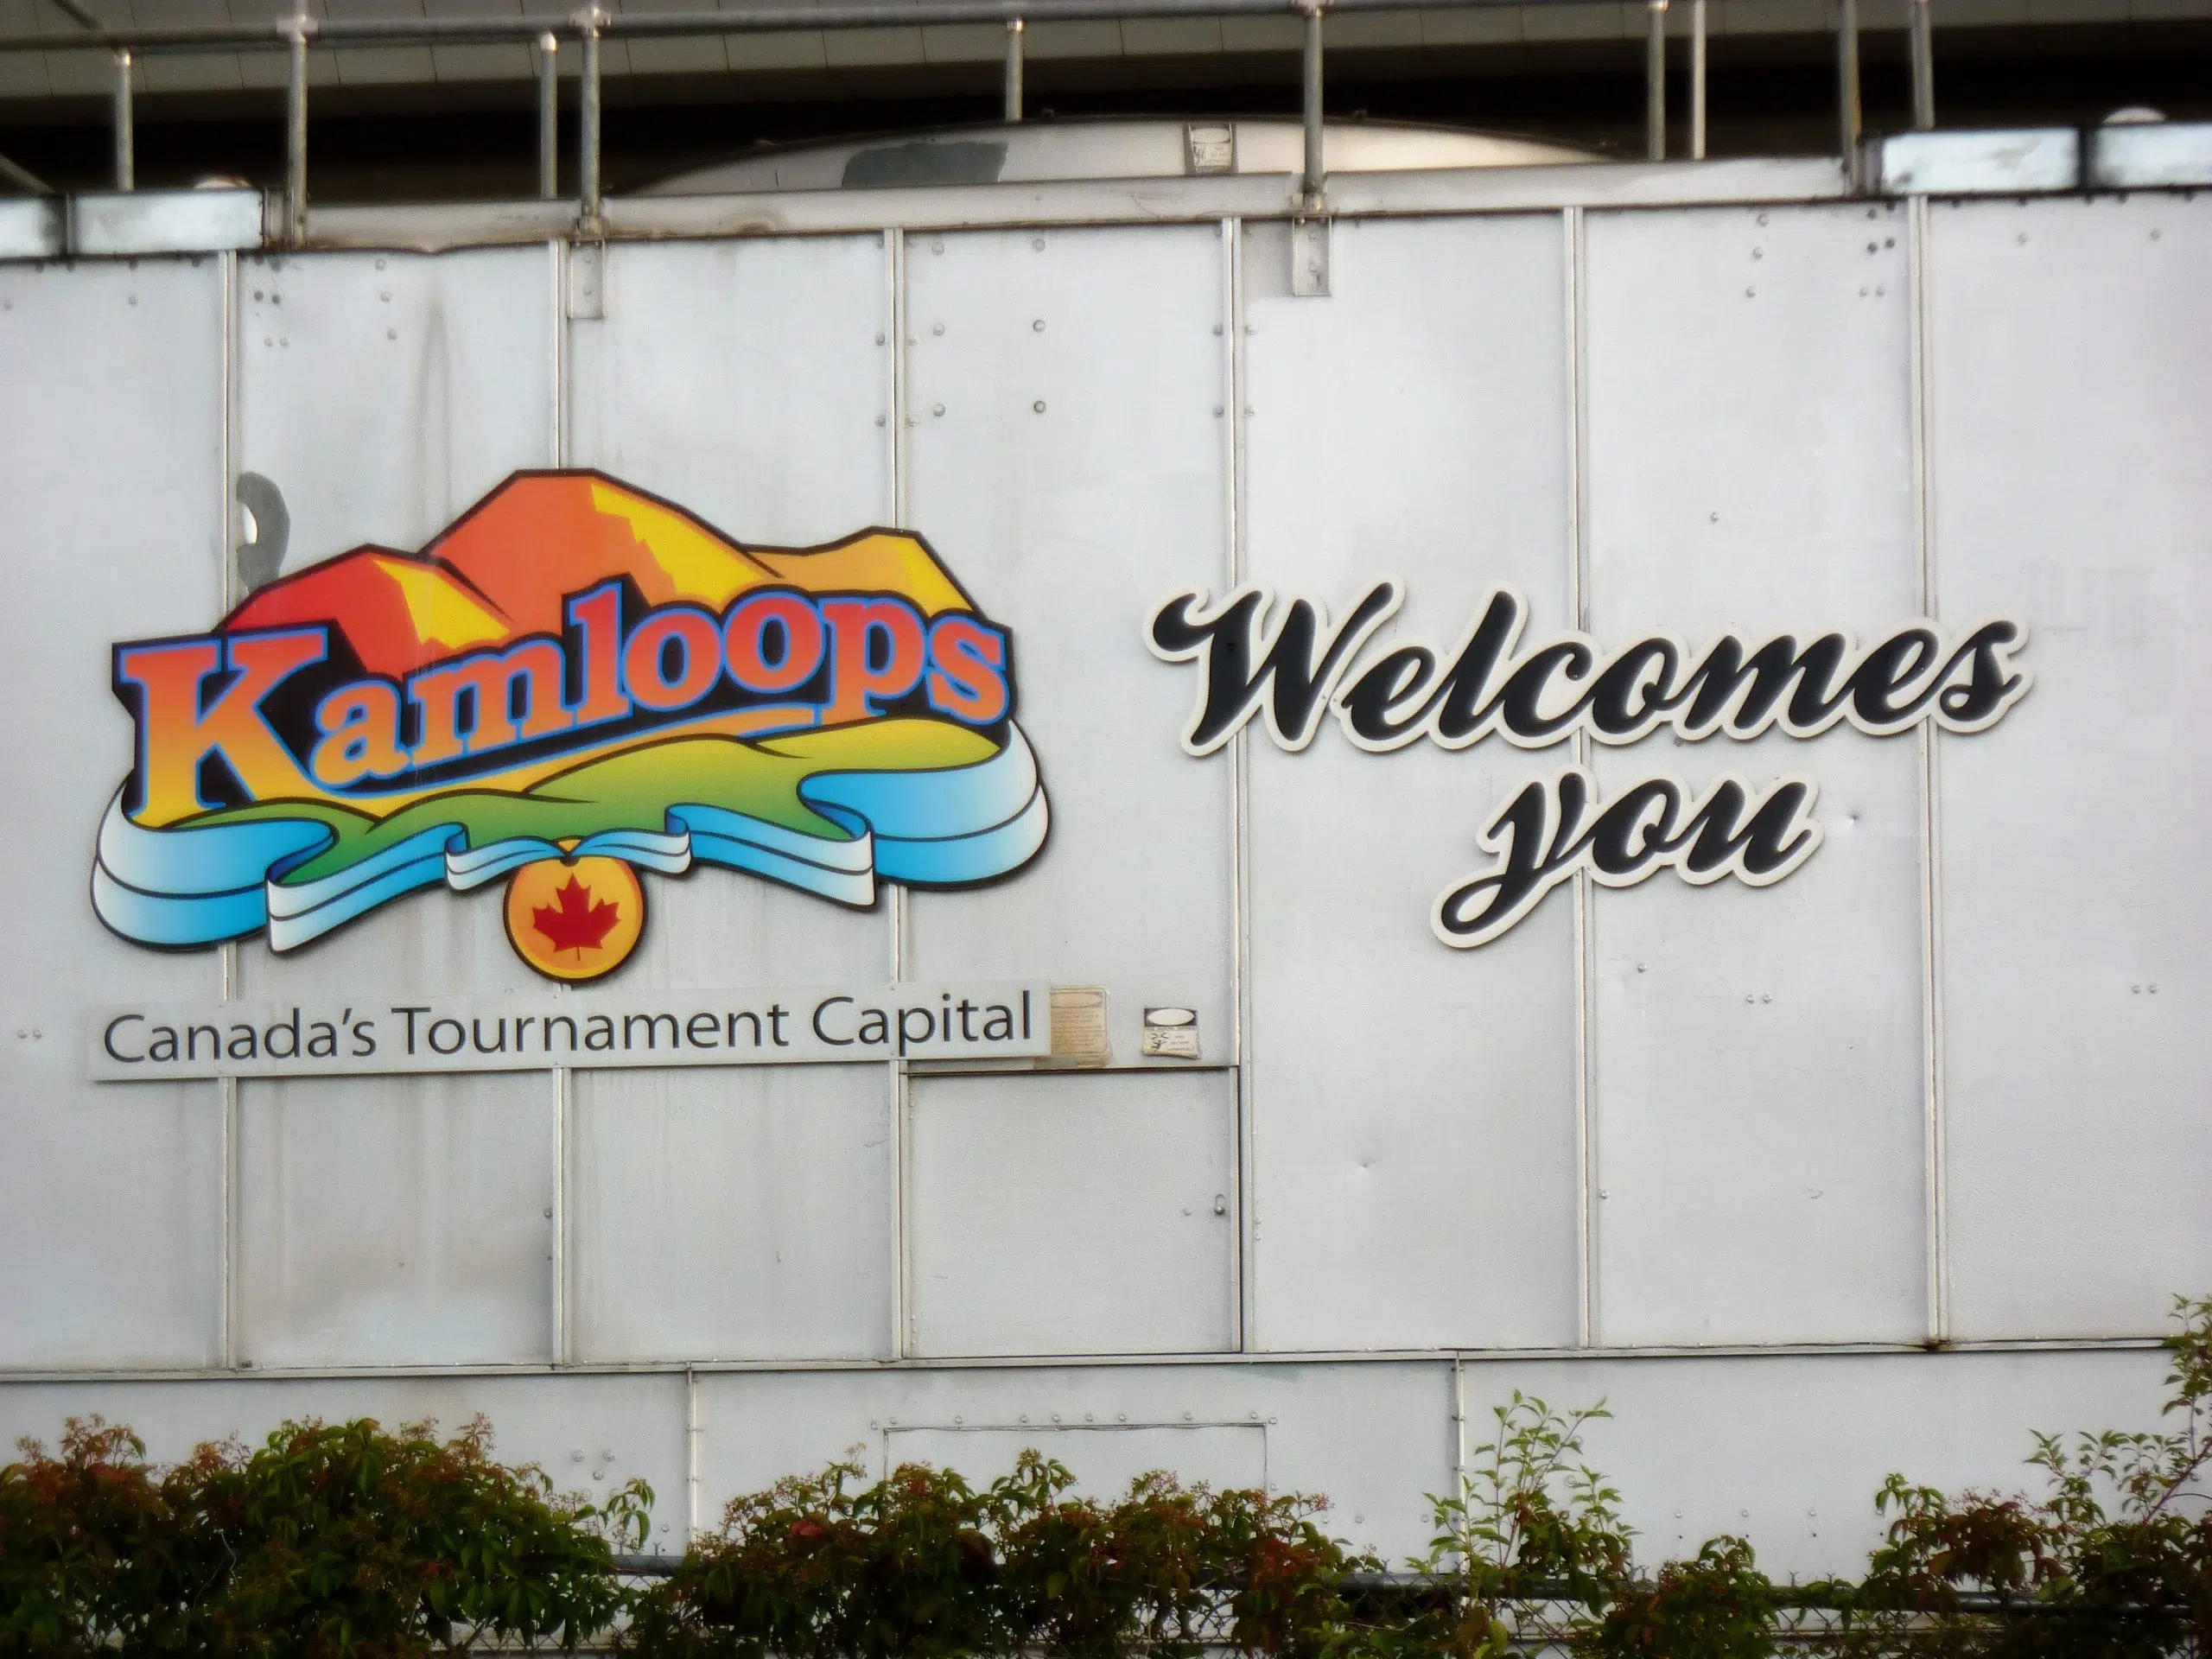 Tournament Capital facilities bringing in big economic benefits to Kamloops